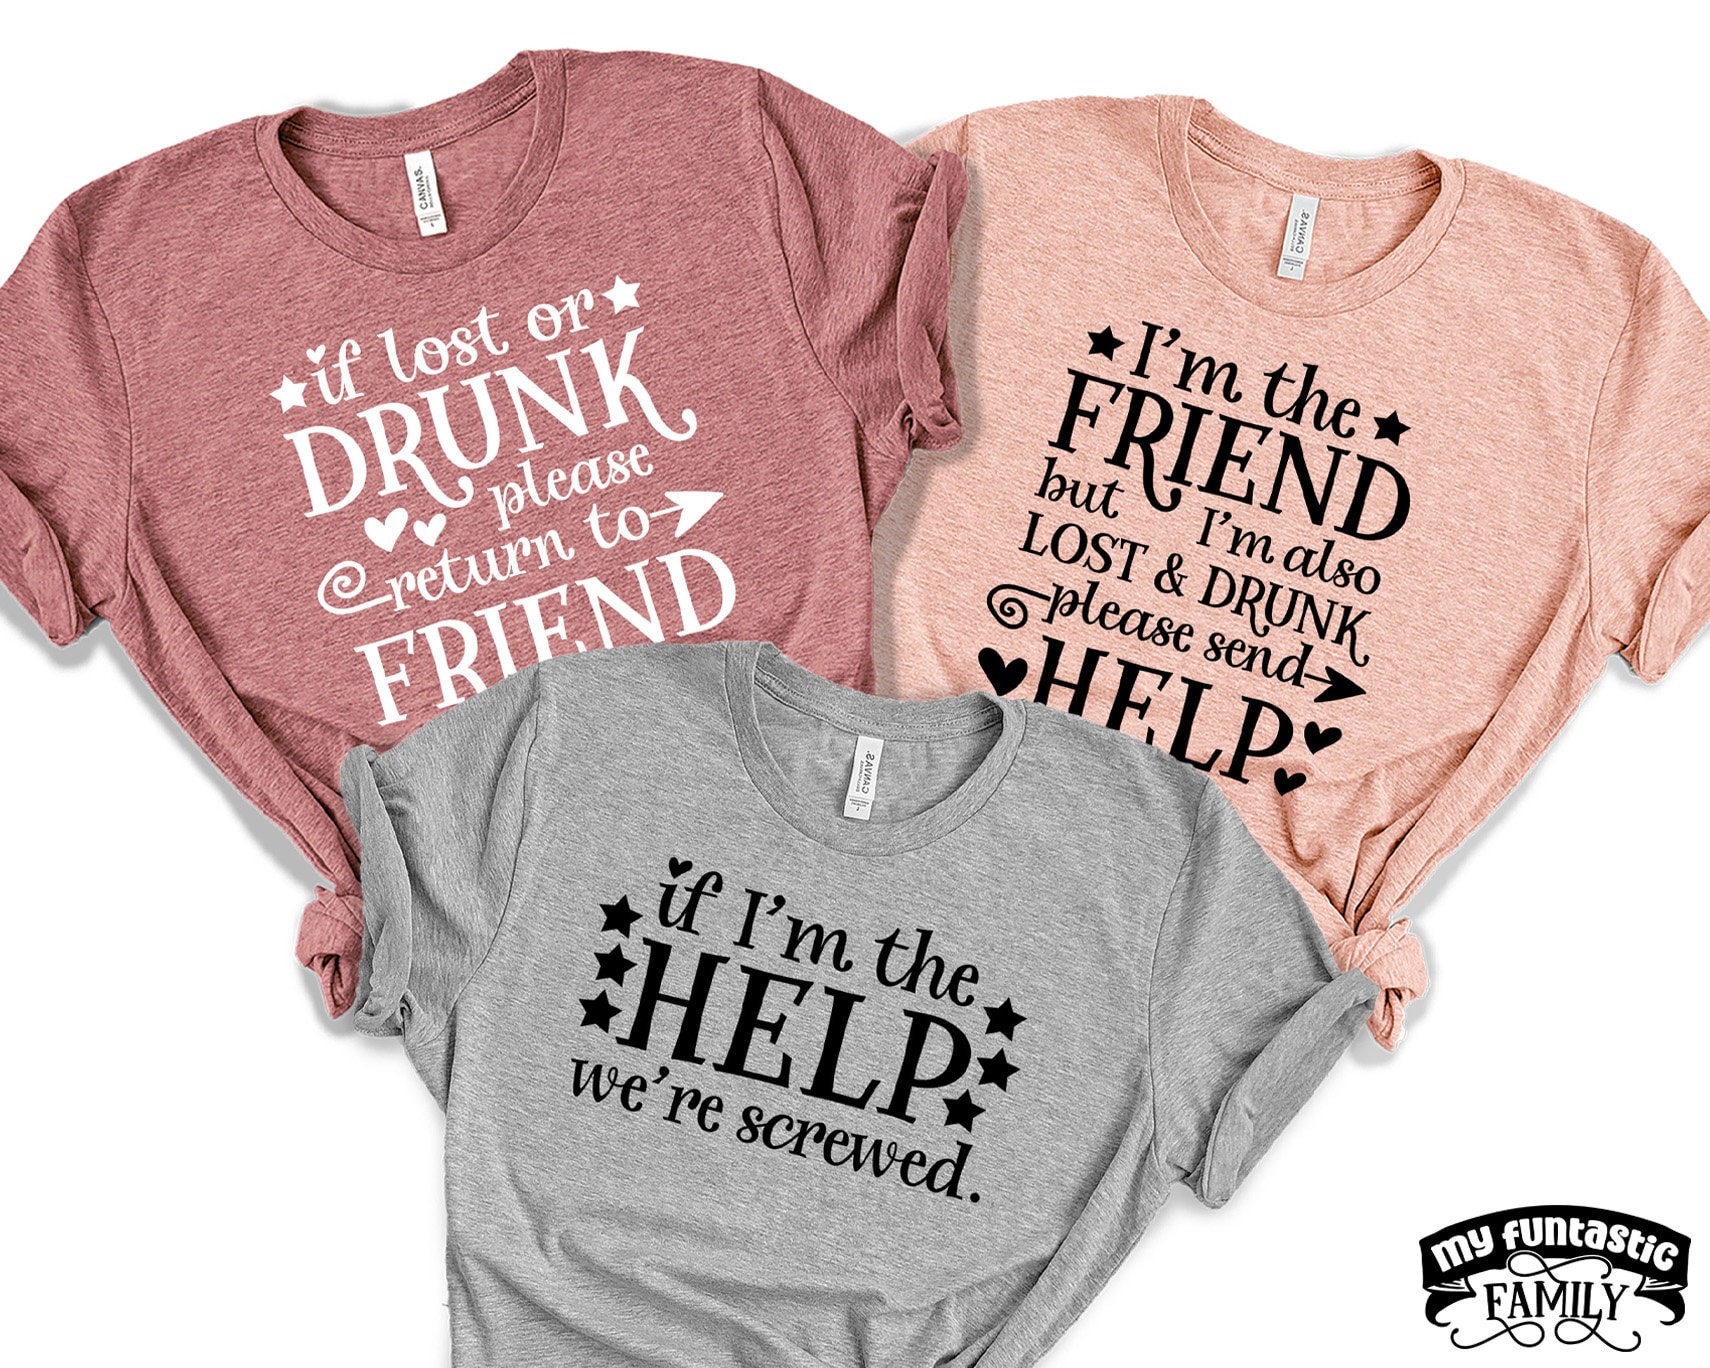 best friend shirts that match for girls